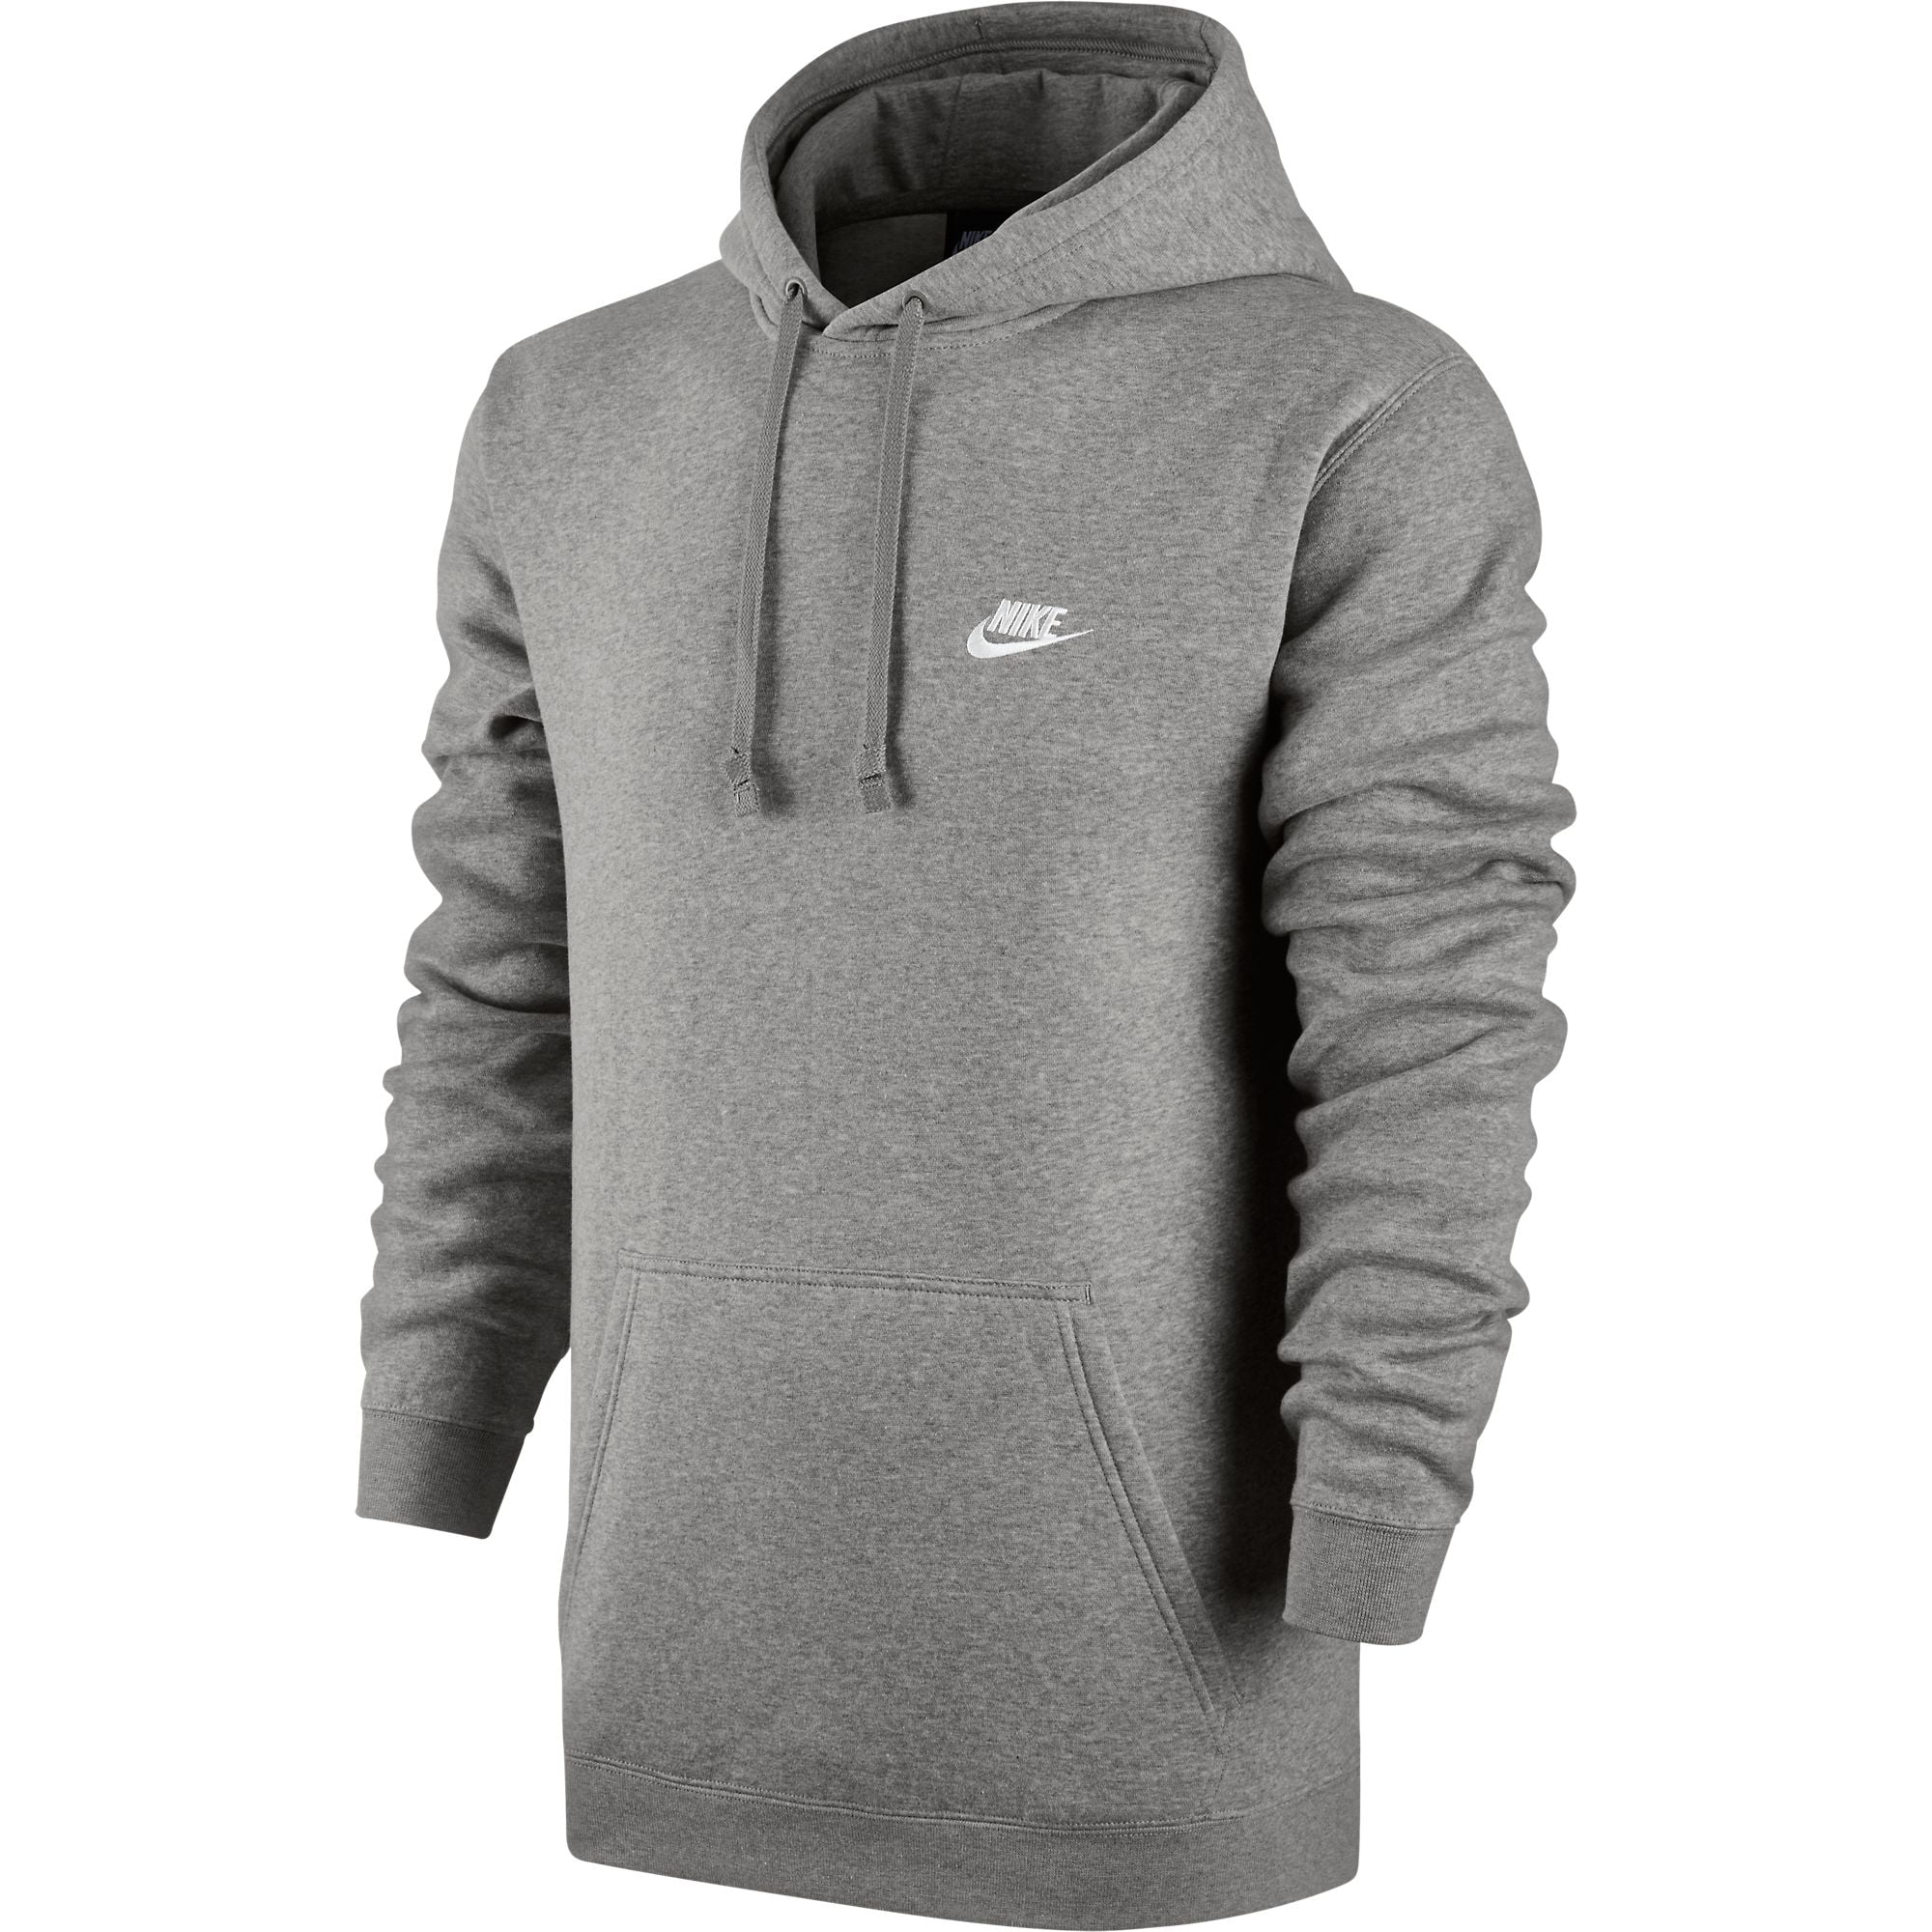 light gray nike hoodie